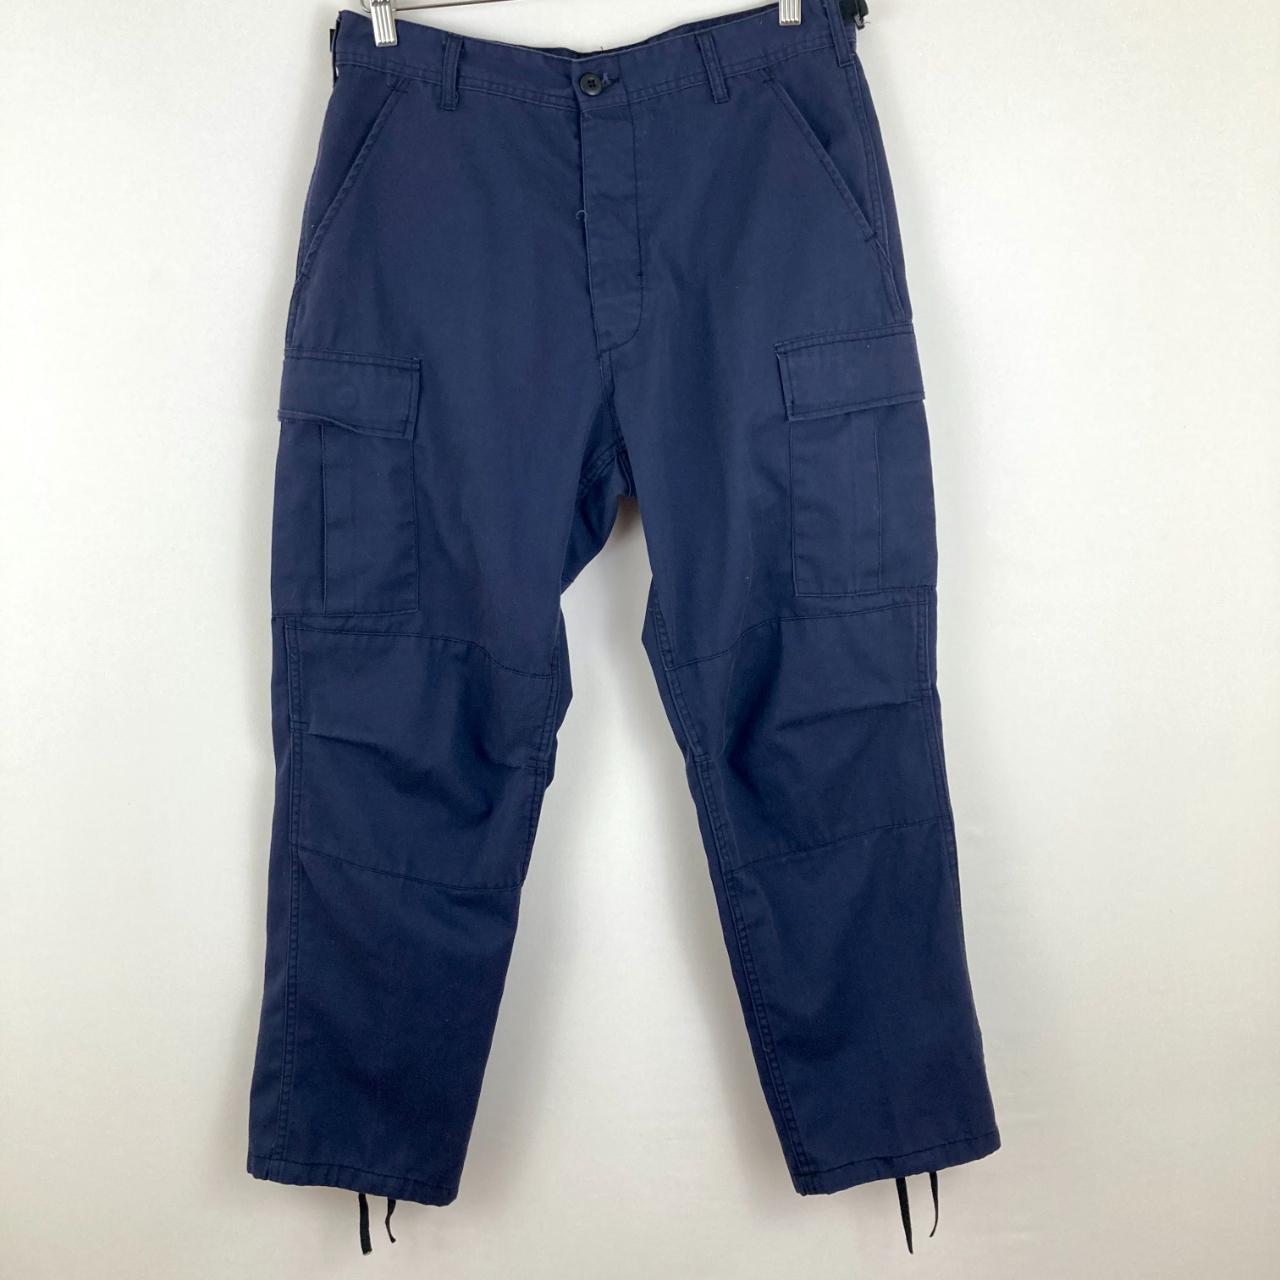 Navy Tactical cargo pants | adjustable waist and... - Depop